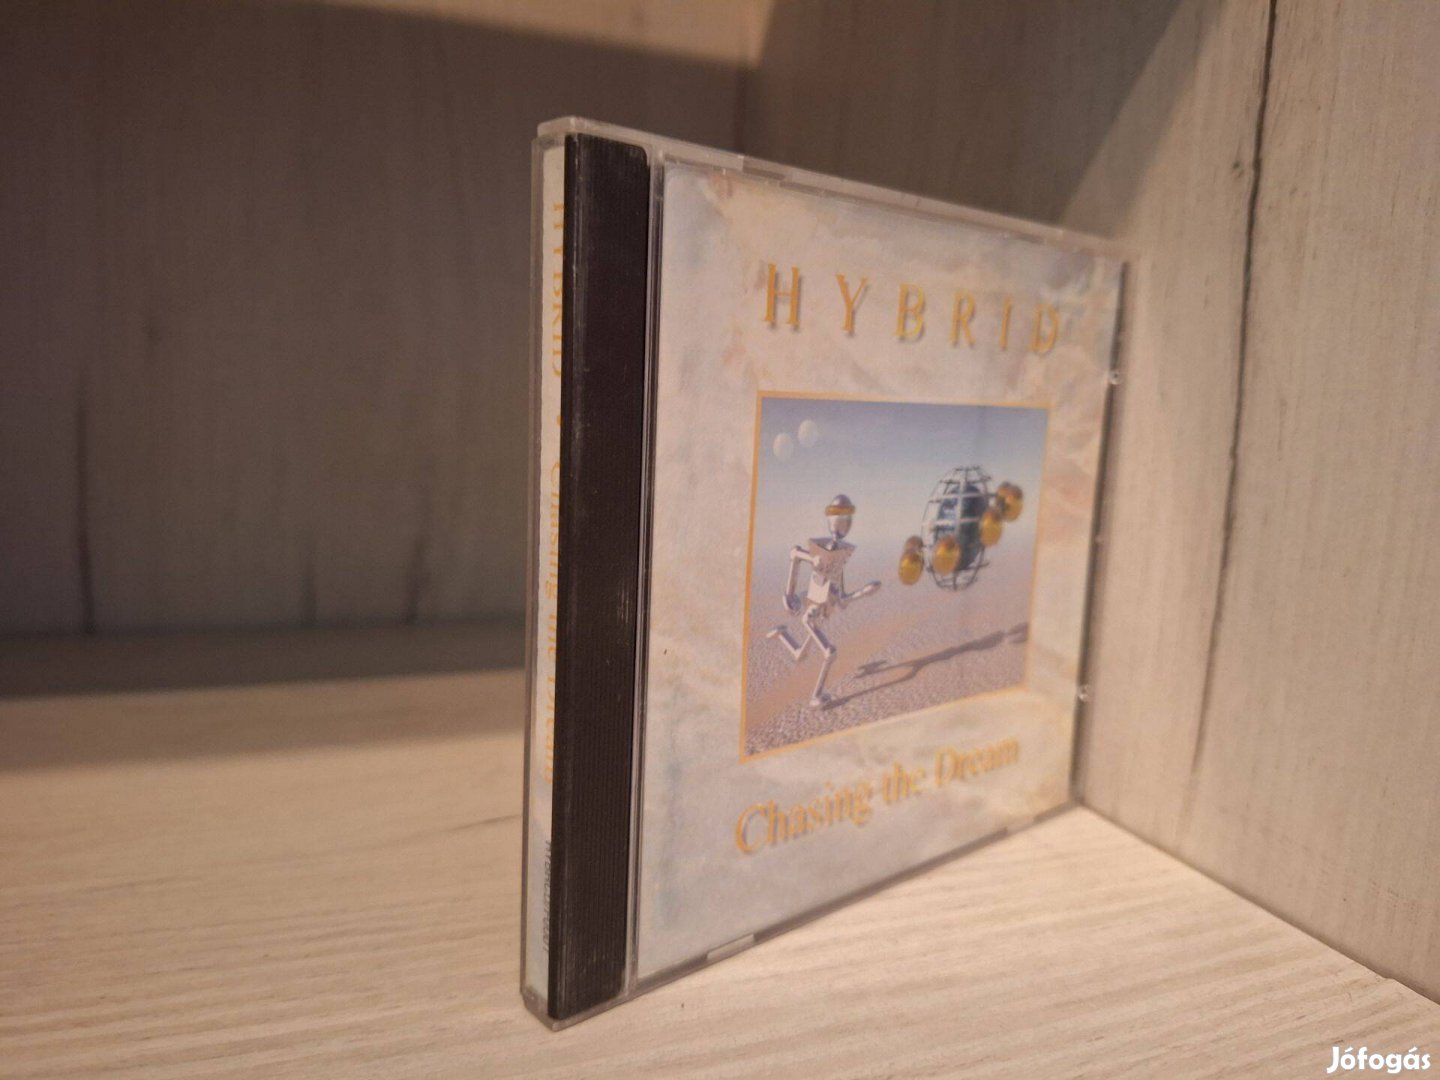 Hybrid - Chasing The Dream CD